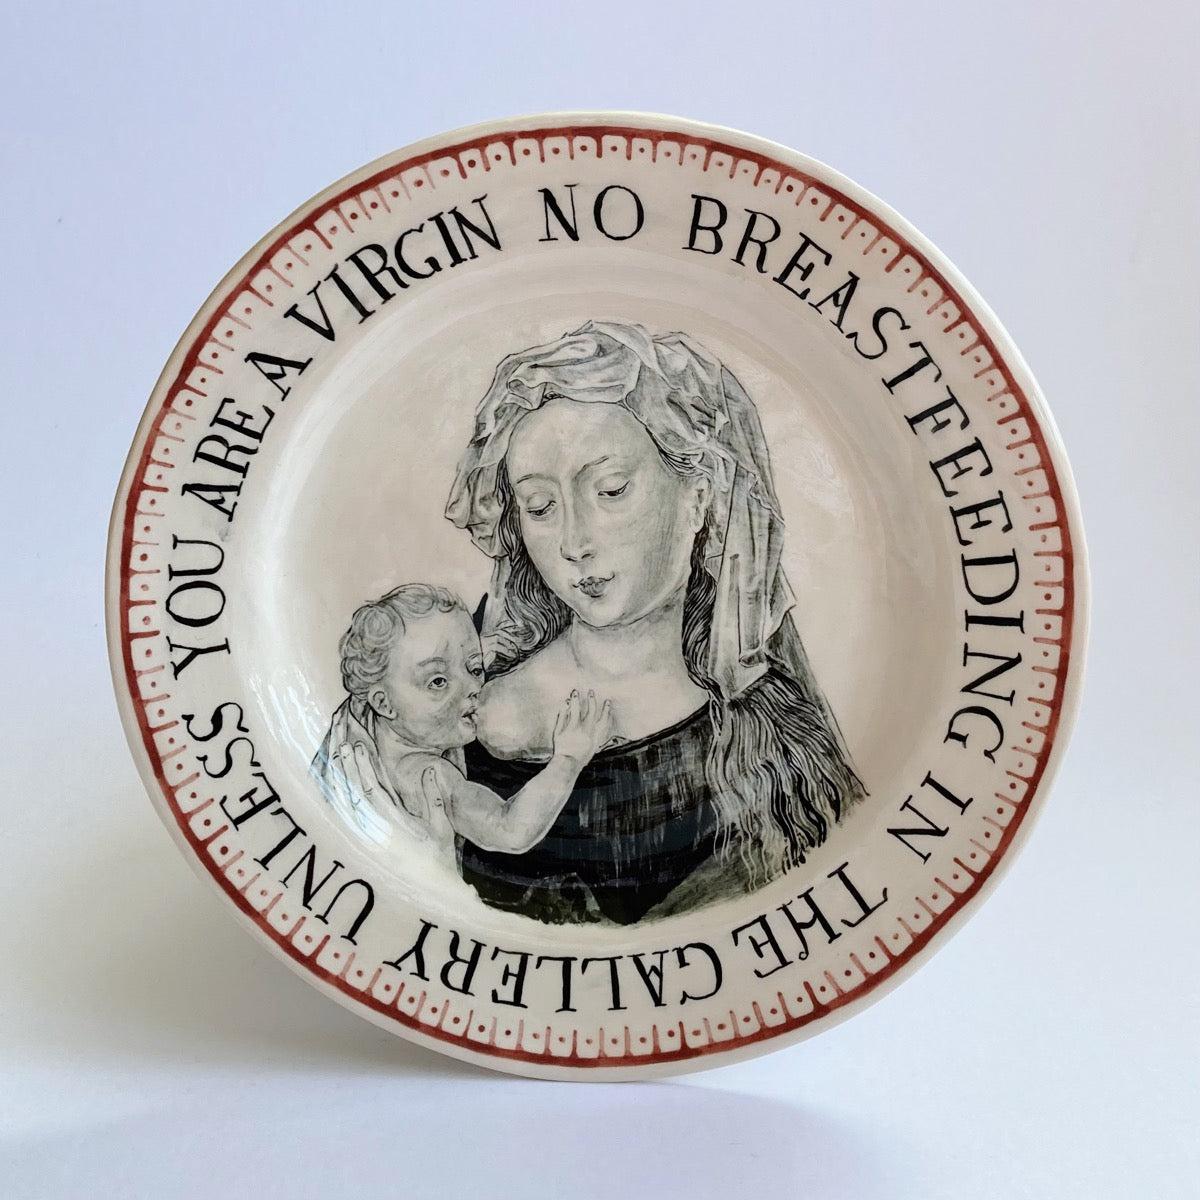 No breastfeeding in the gallery